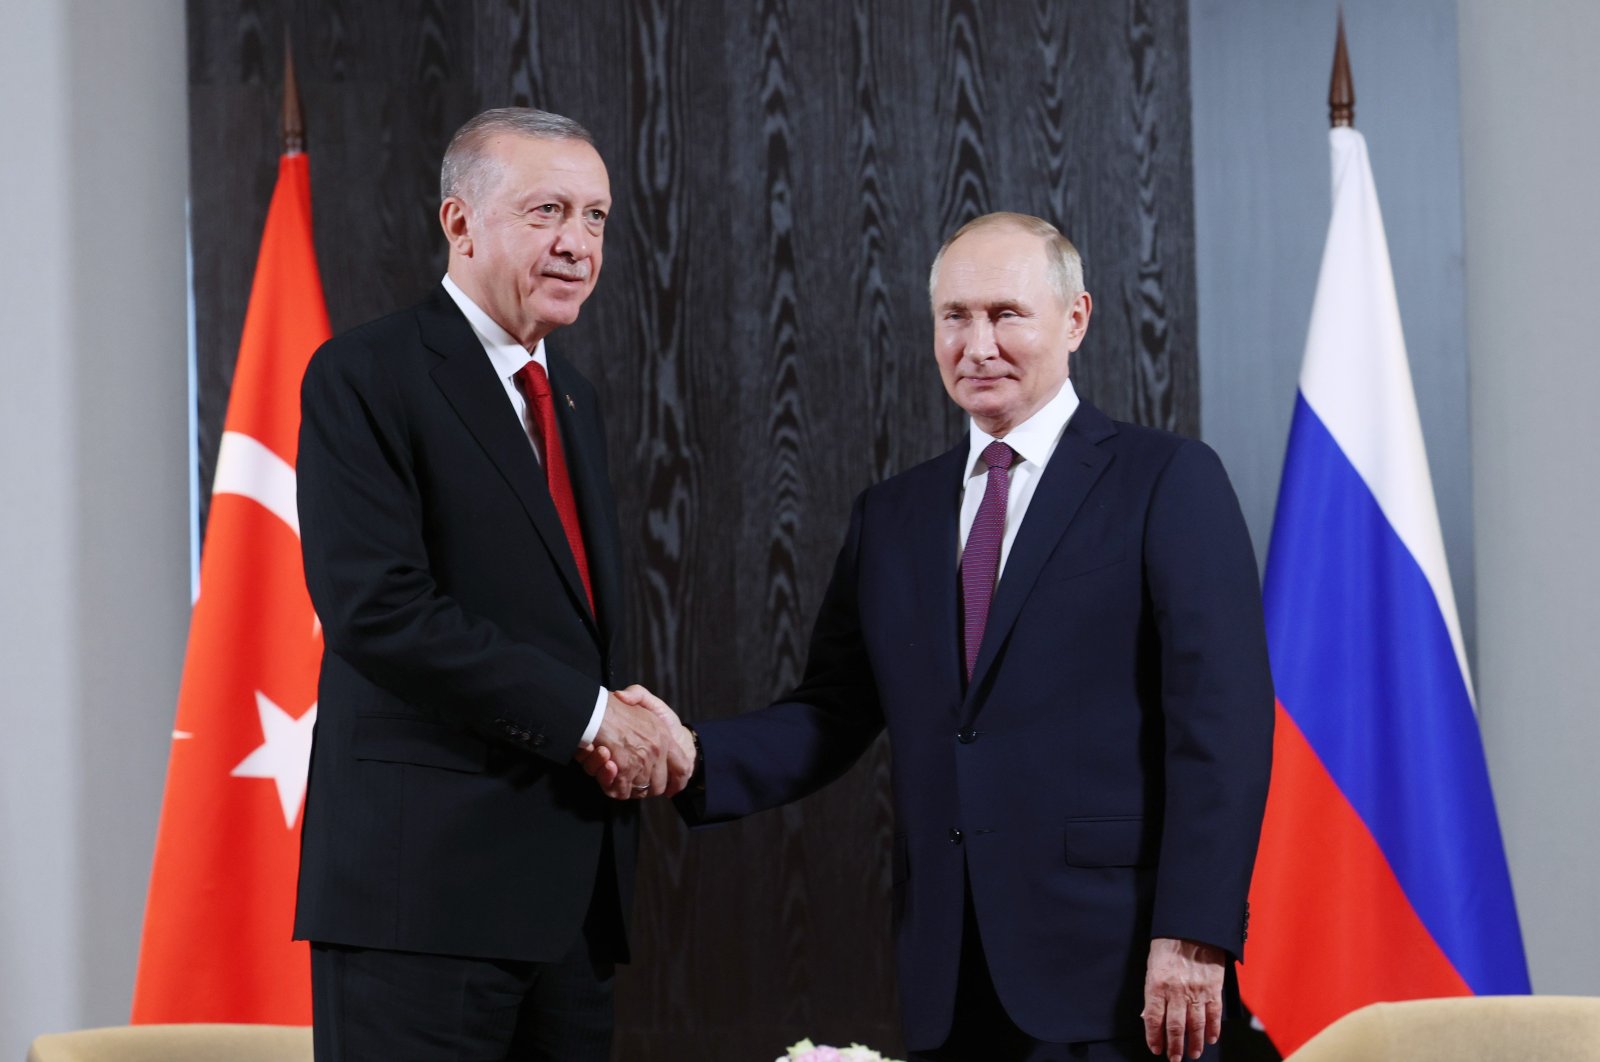 Erdoğan, Putin agree on Türkiye visit as Ankara presses for grain deal